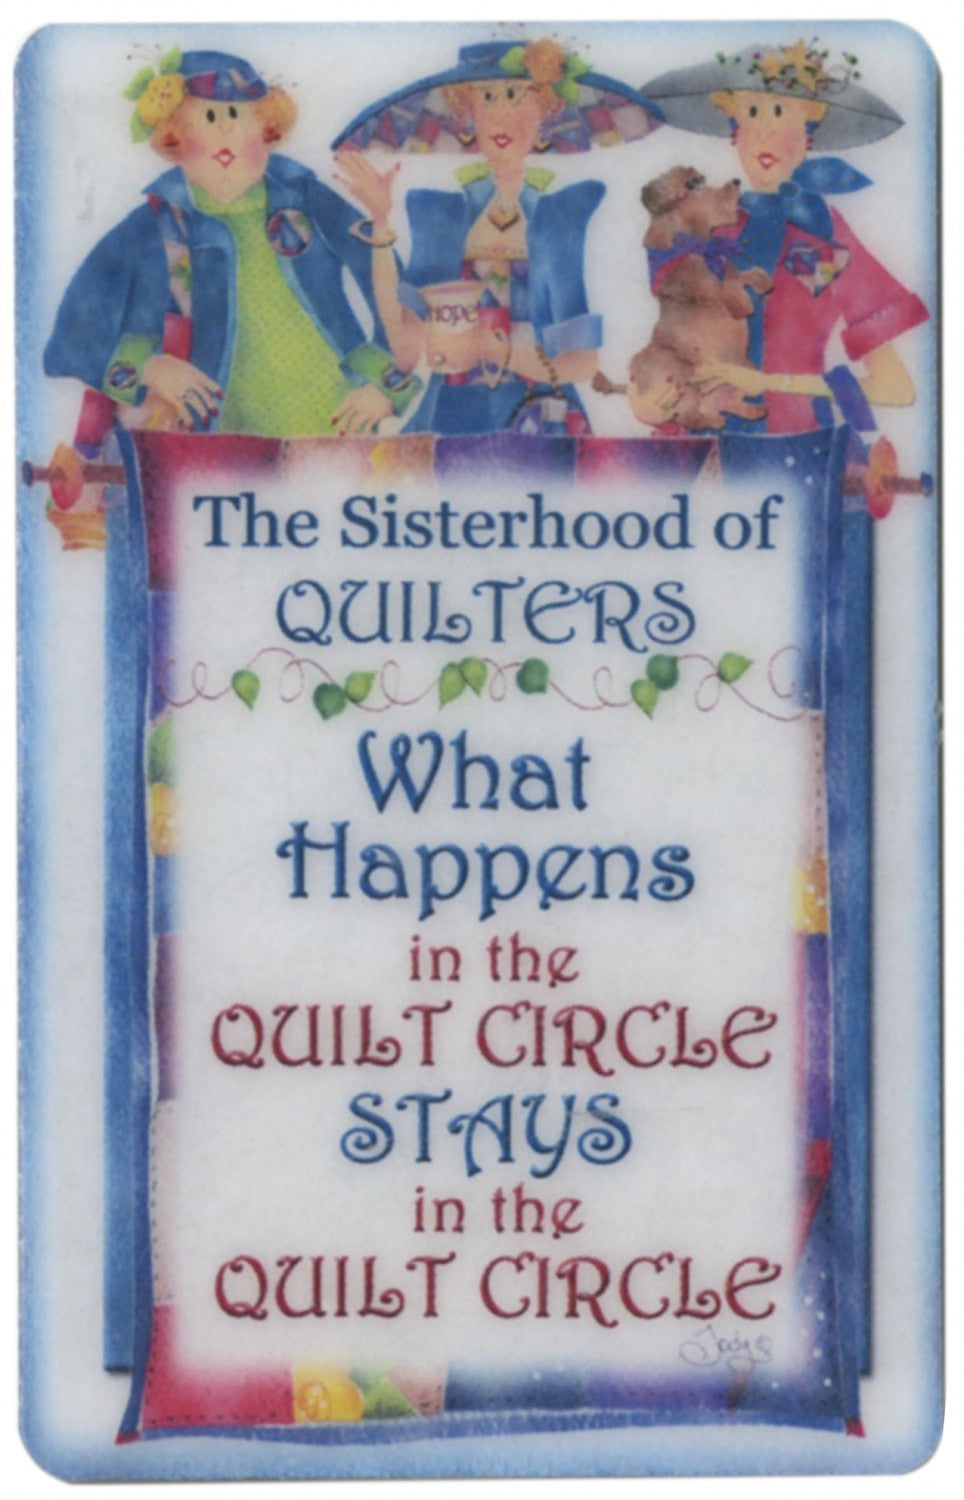 Suzy Toronto - Sisterhood of Quilters Magnet